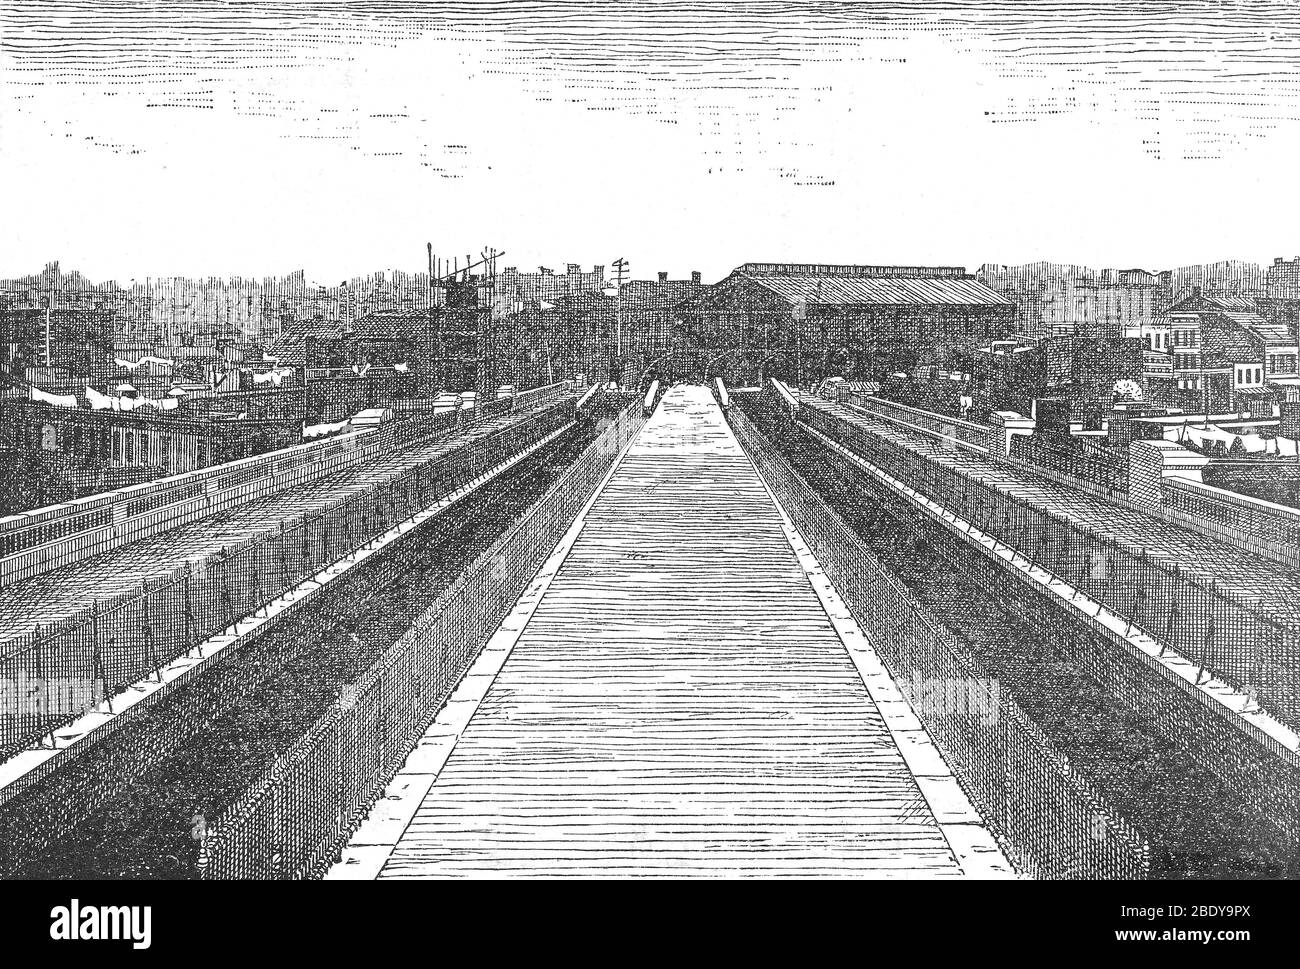 New York, ingresso al ponte di Brooklyn, 1883 Foto Stock